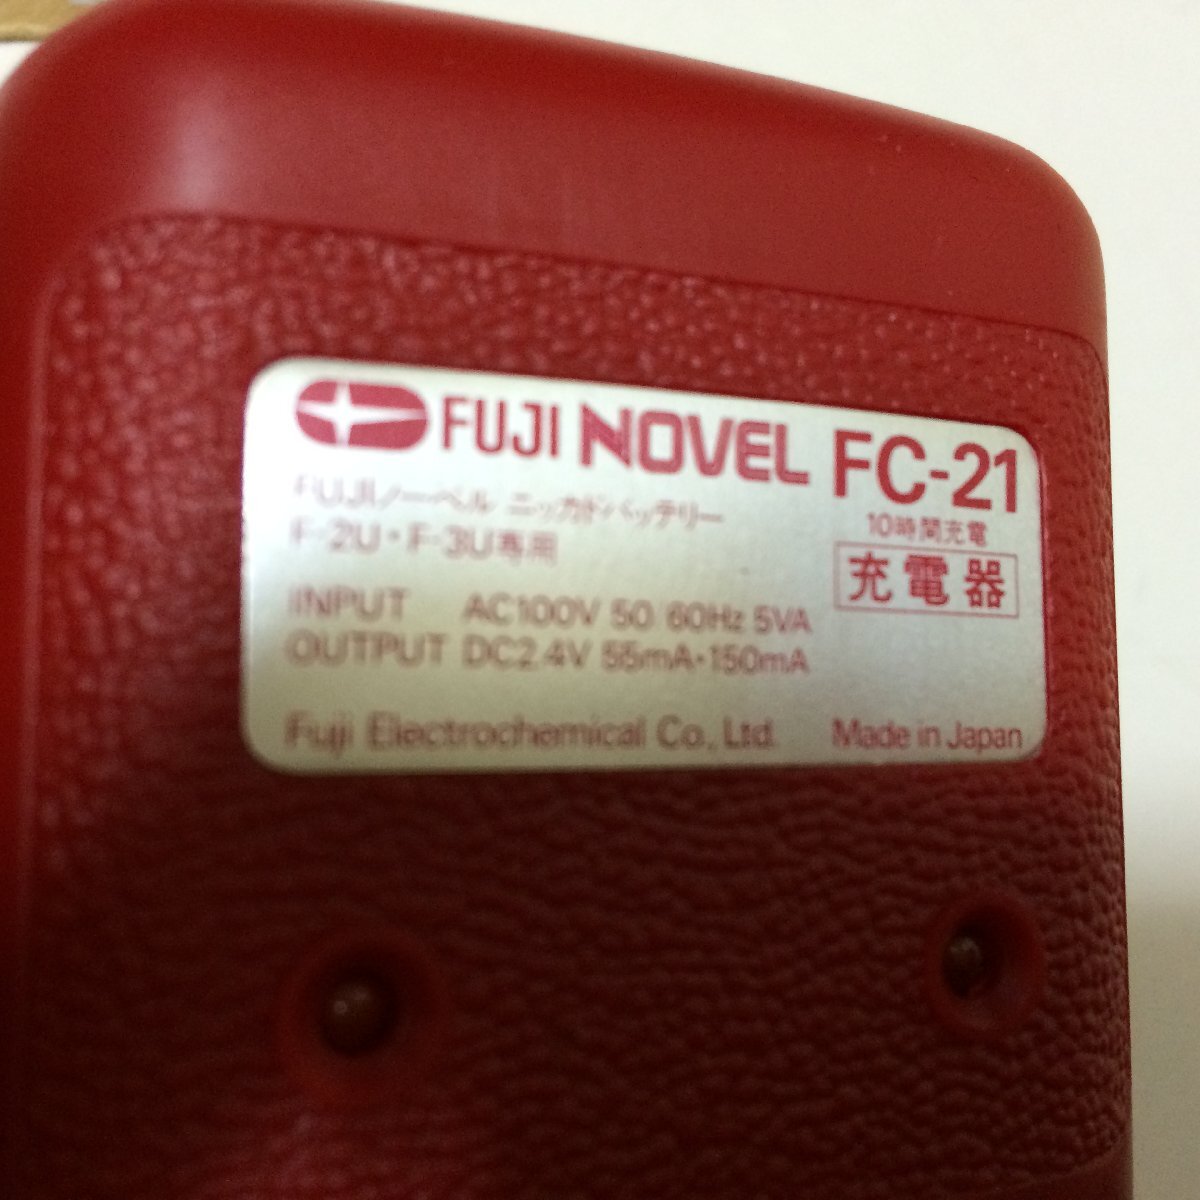 U656 FUJIno- bell nickel *kadomium battery F-2U/F-3U exclusive use charger FC-21 retro 